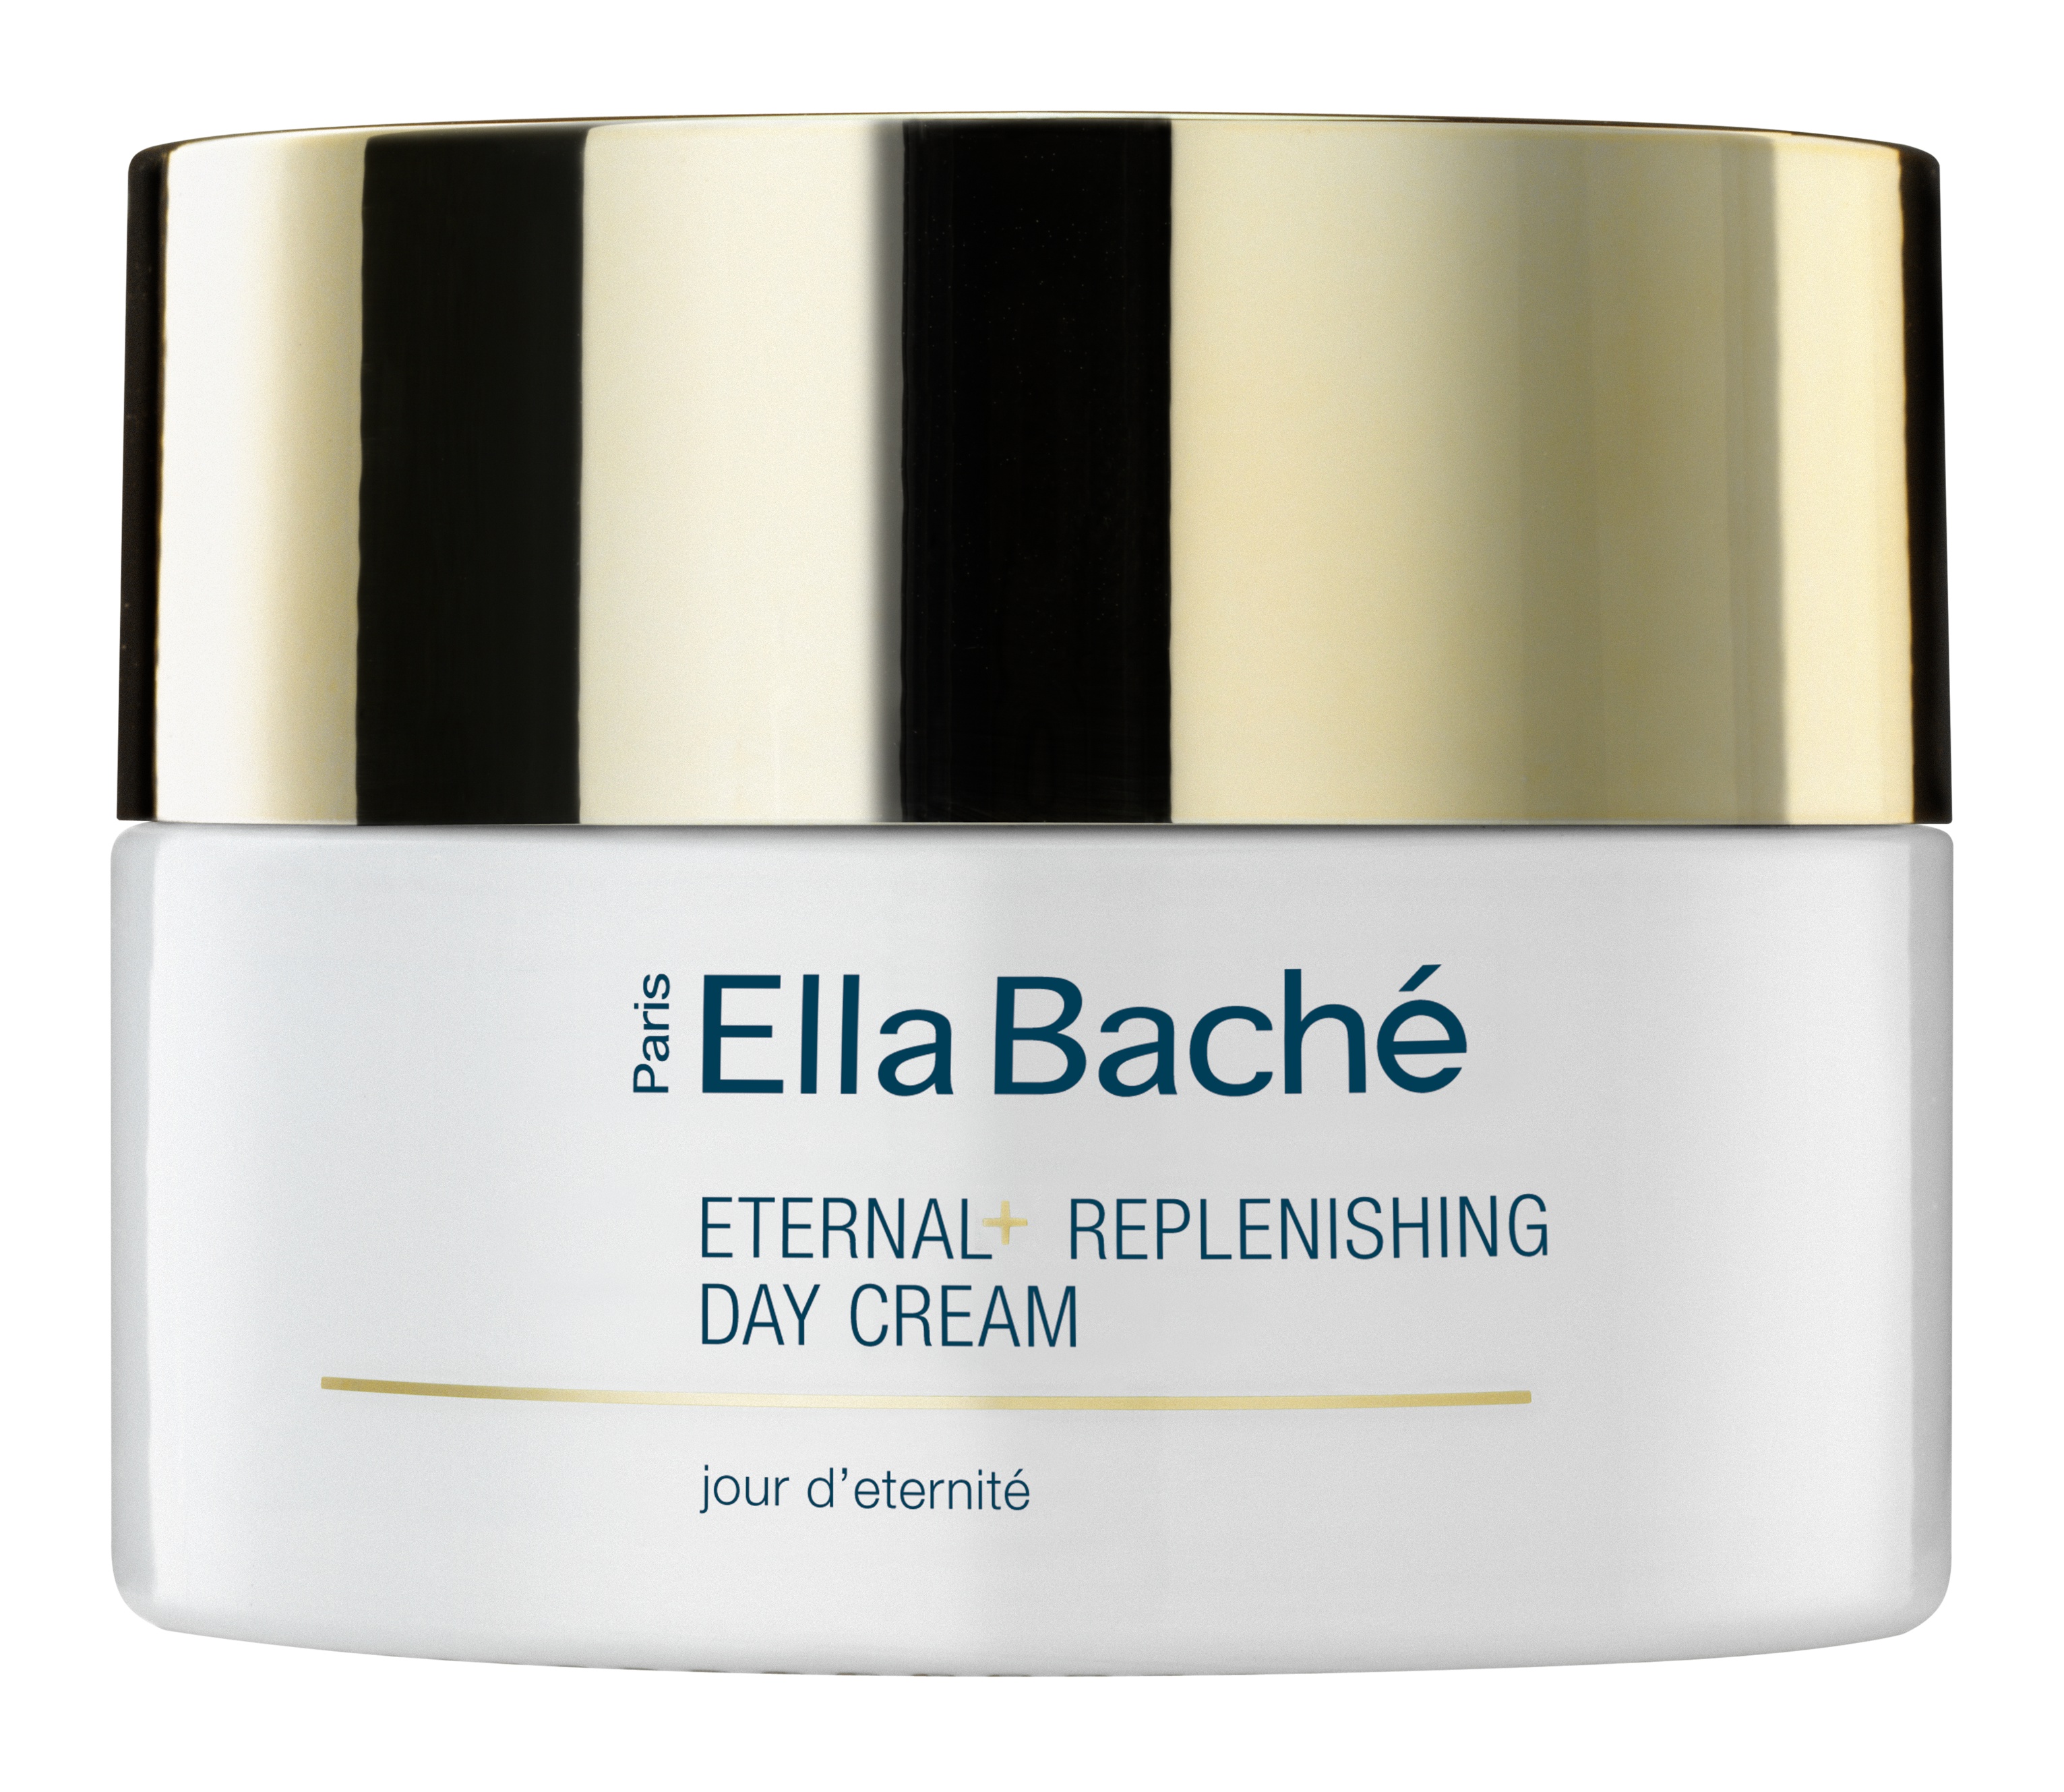 Ella Baché Eternal+ Replenishing Day Cream